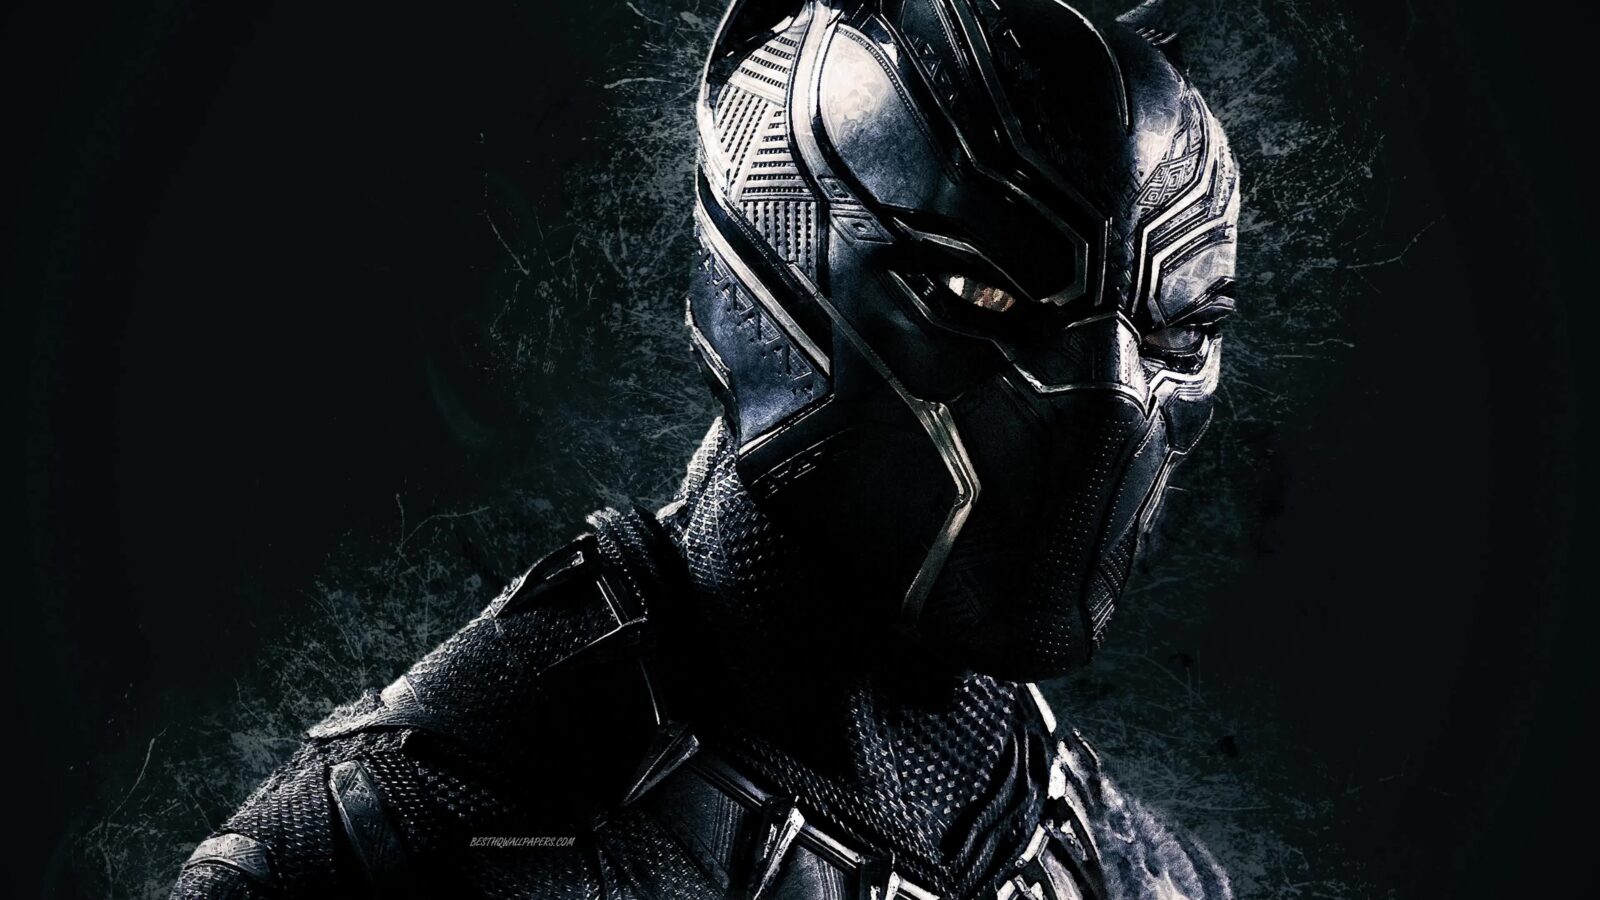 LiveWallpapers4Free.com | Black Panther 4K Superhero Splashes - Free Live Wallpaper